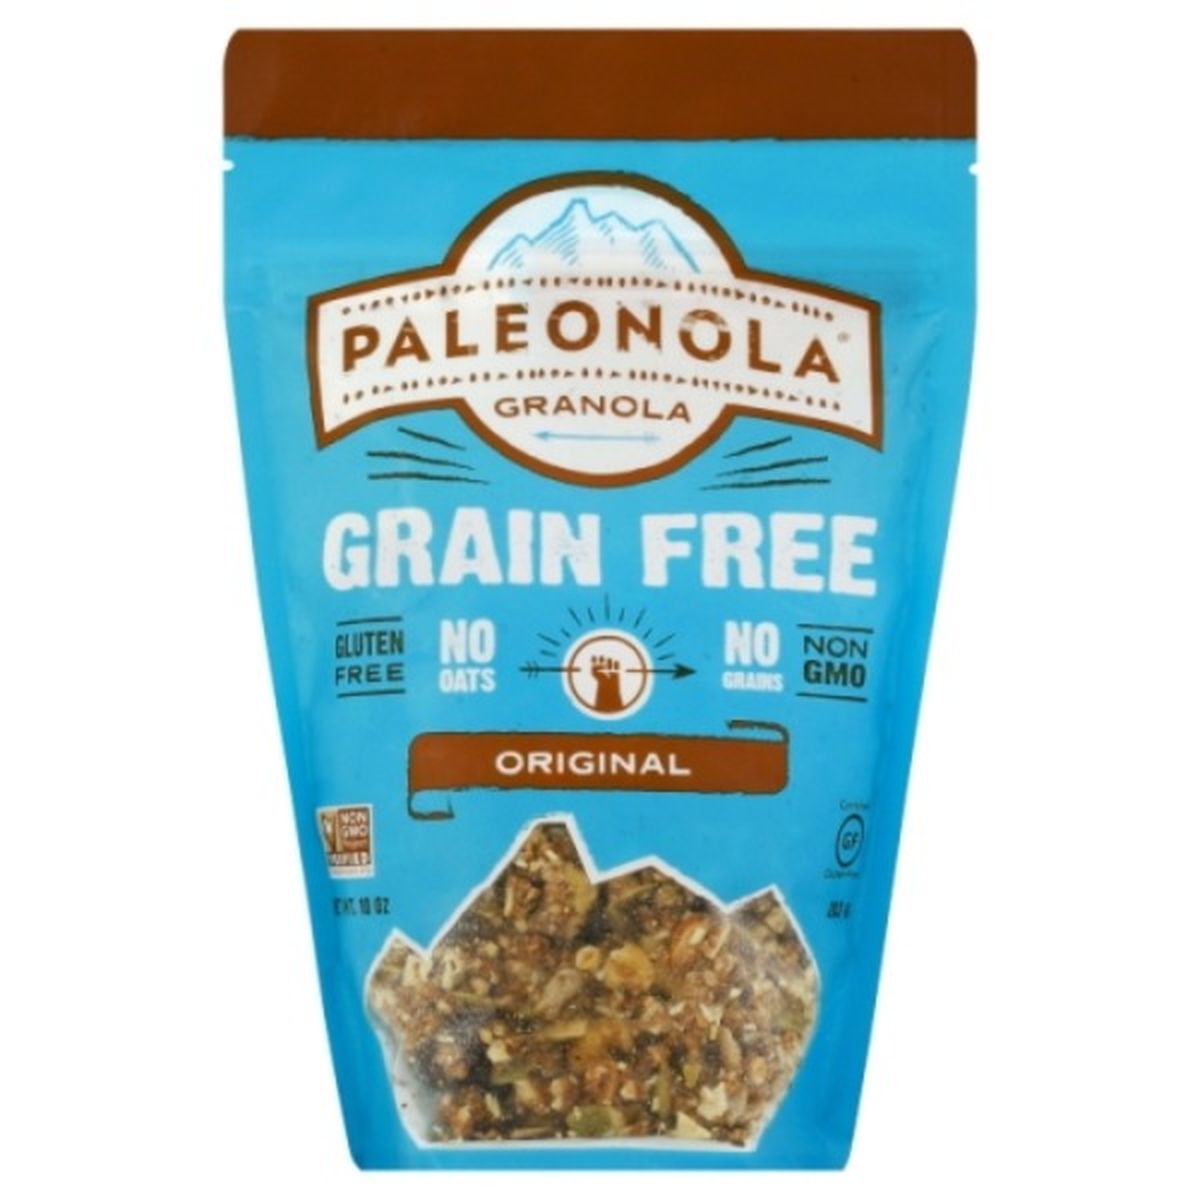 Calories in Paleonola Granola, Grain Free, Original